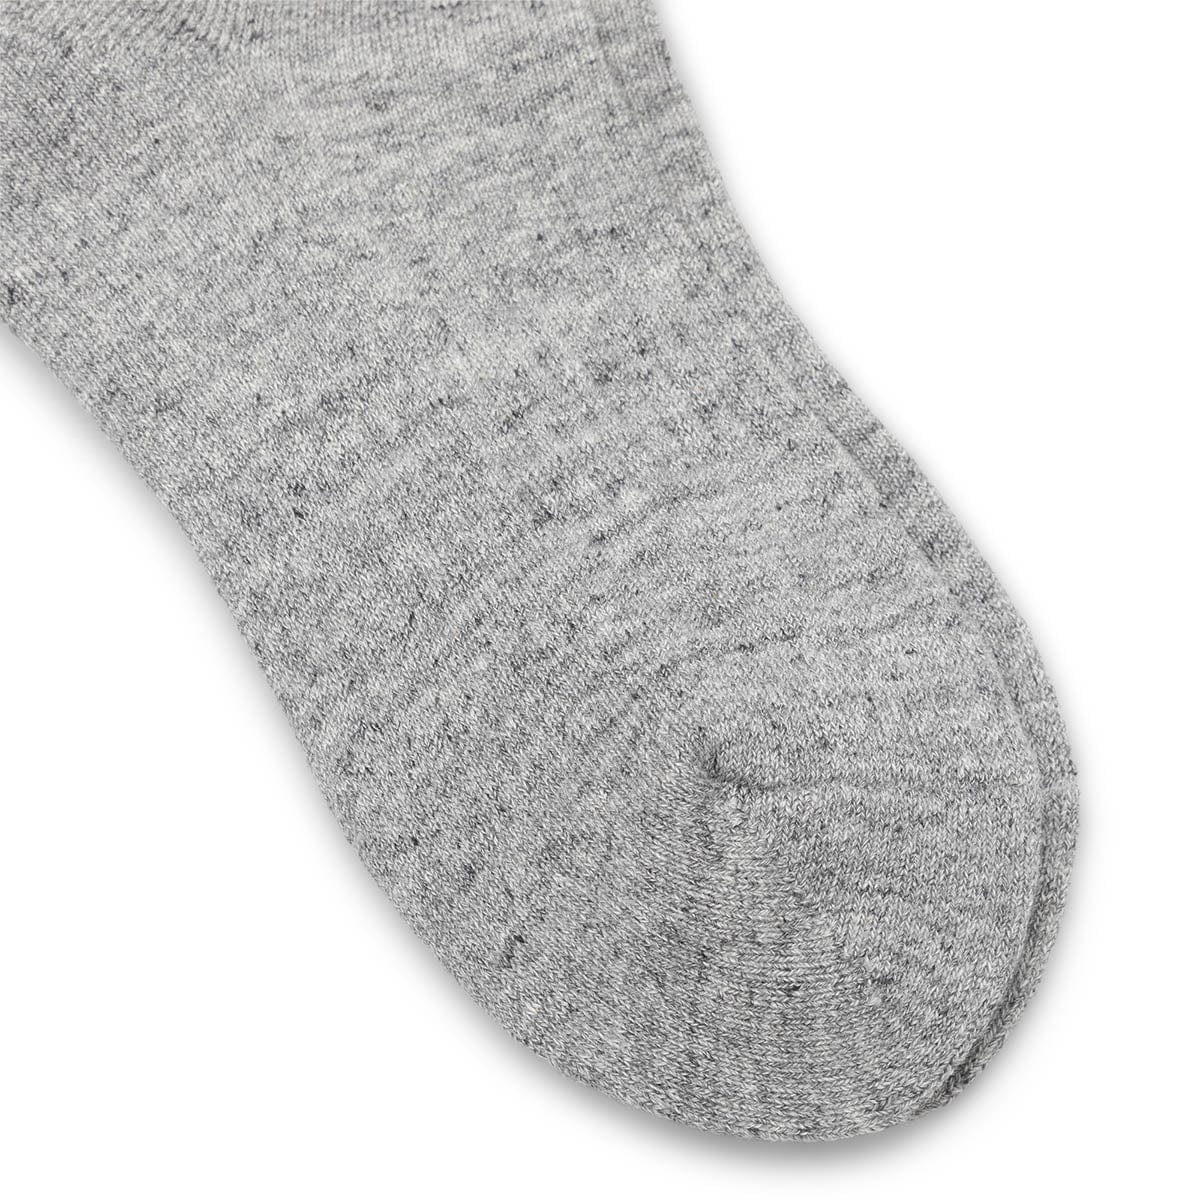 Human Made Socks PILE SOCKS